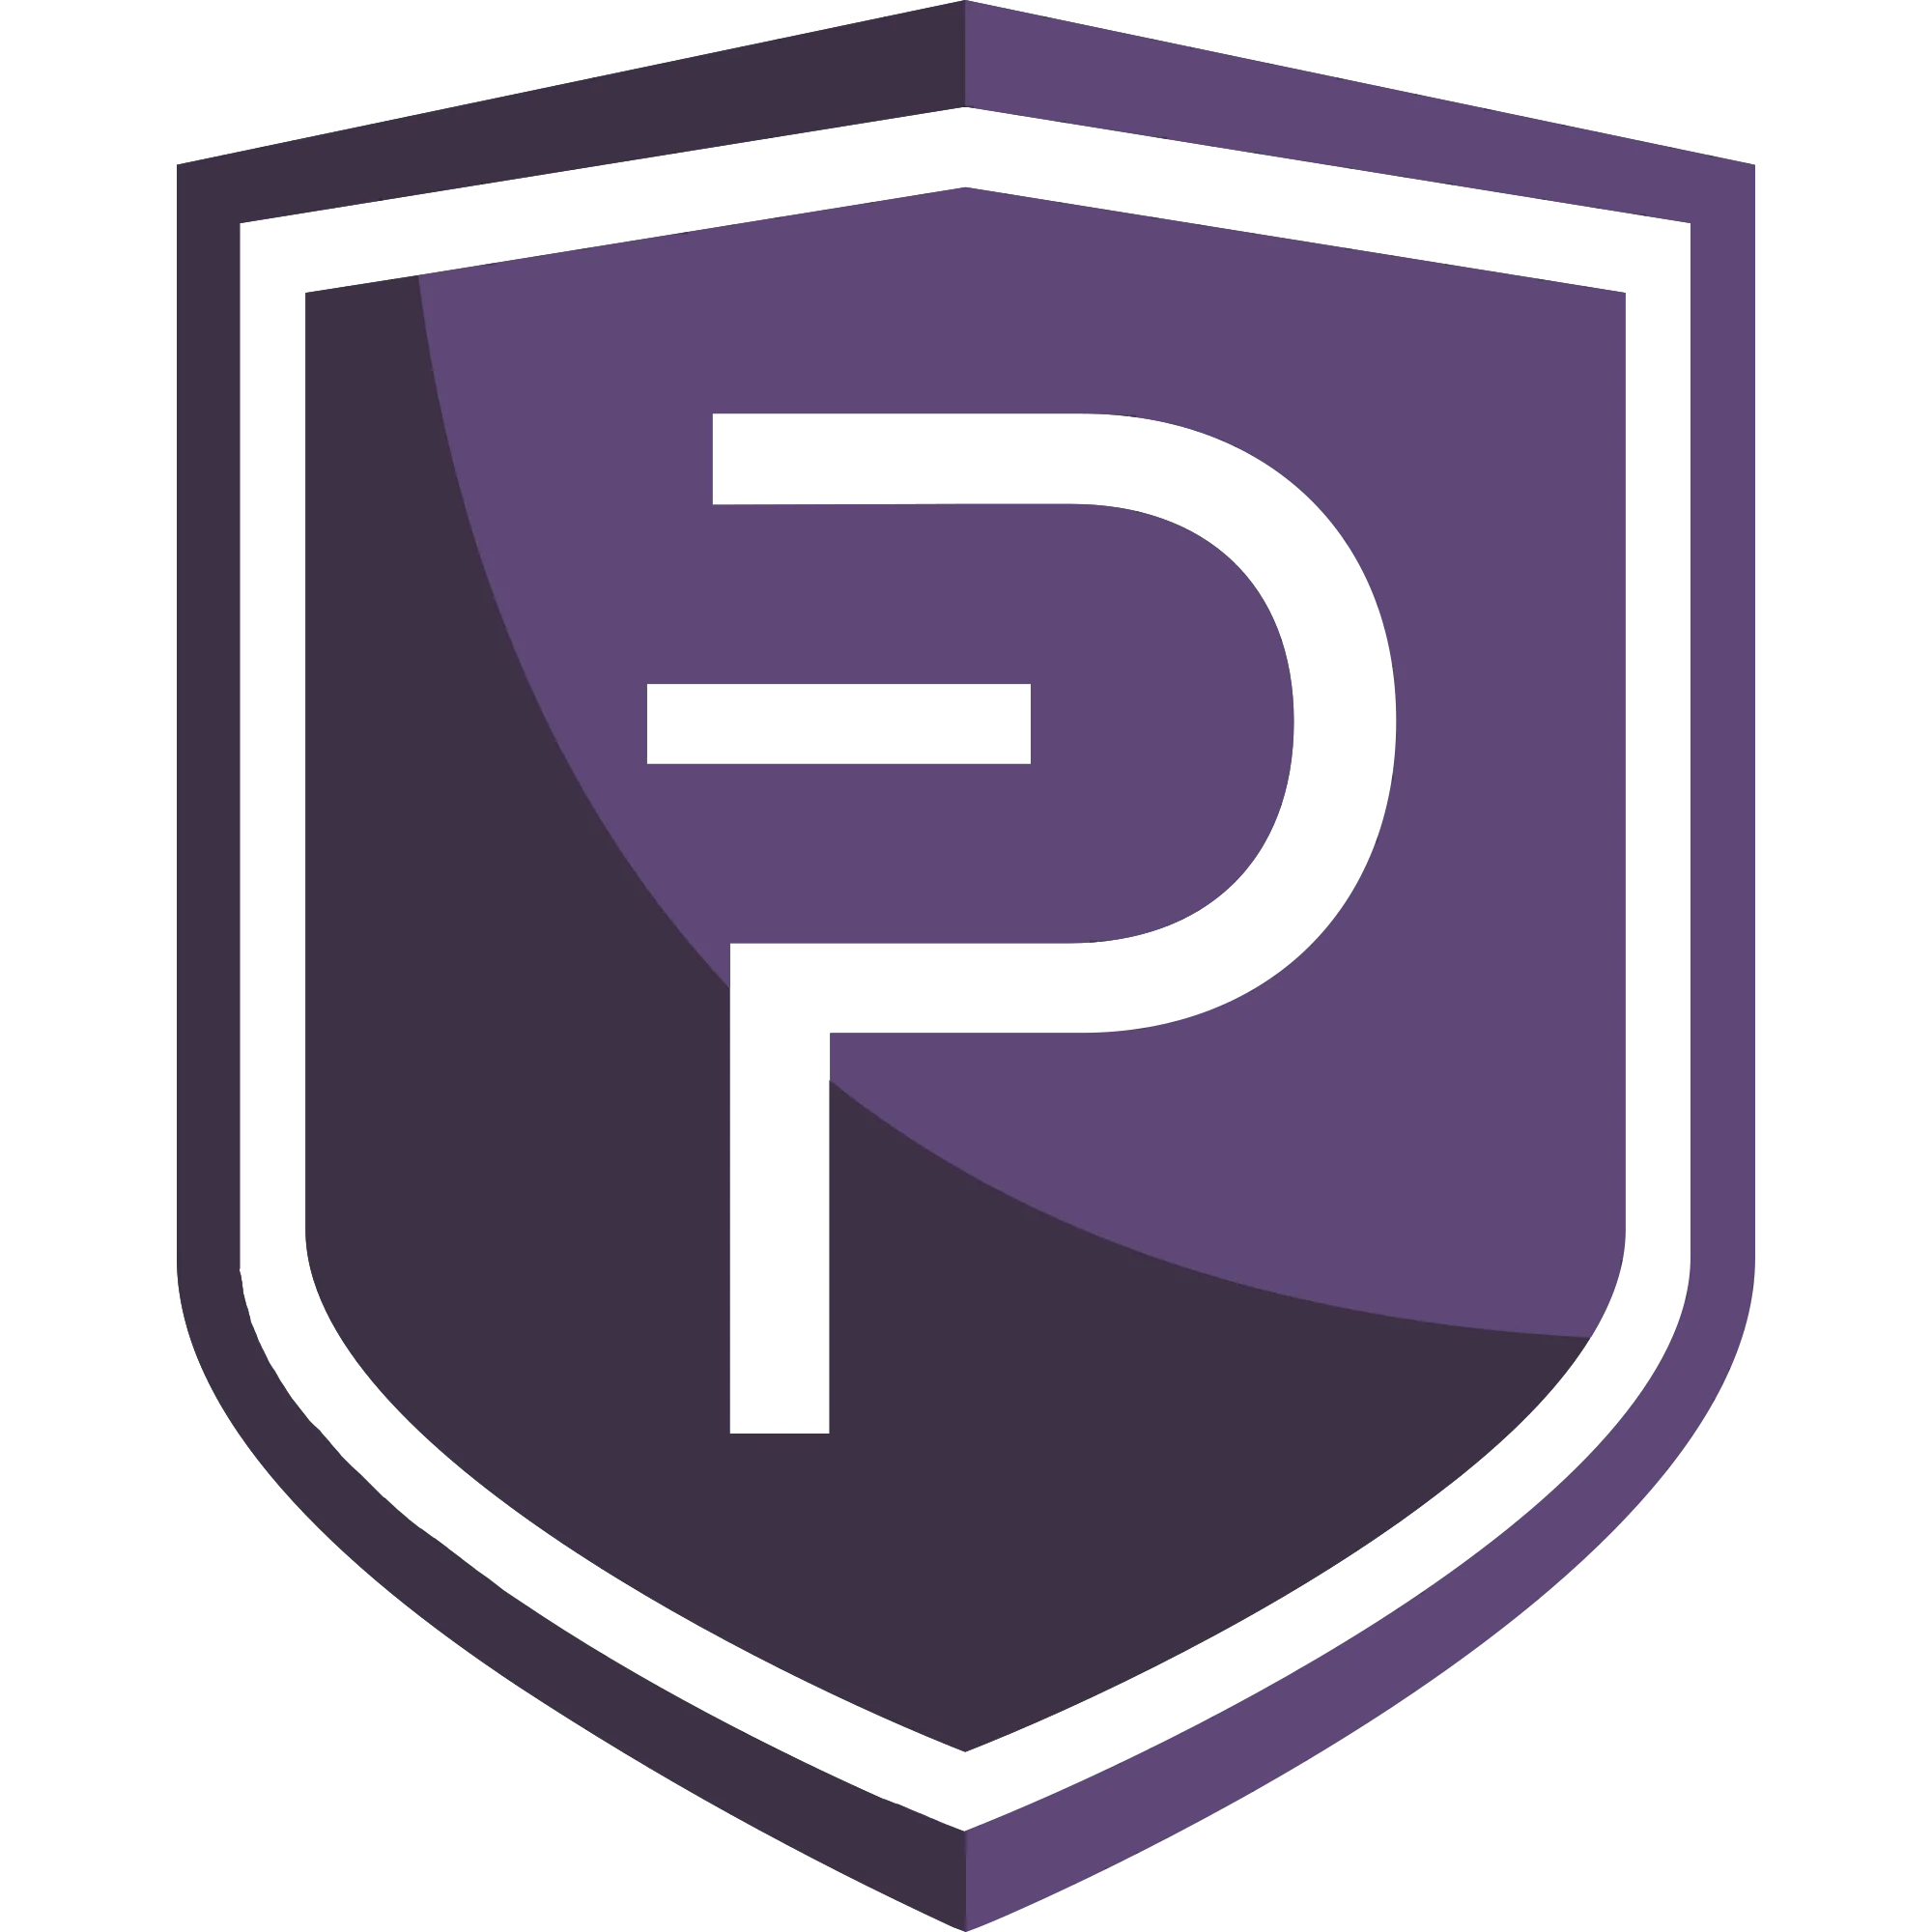 PIVX logo in png format